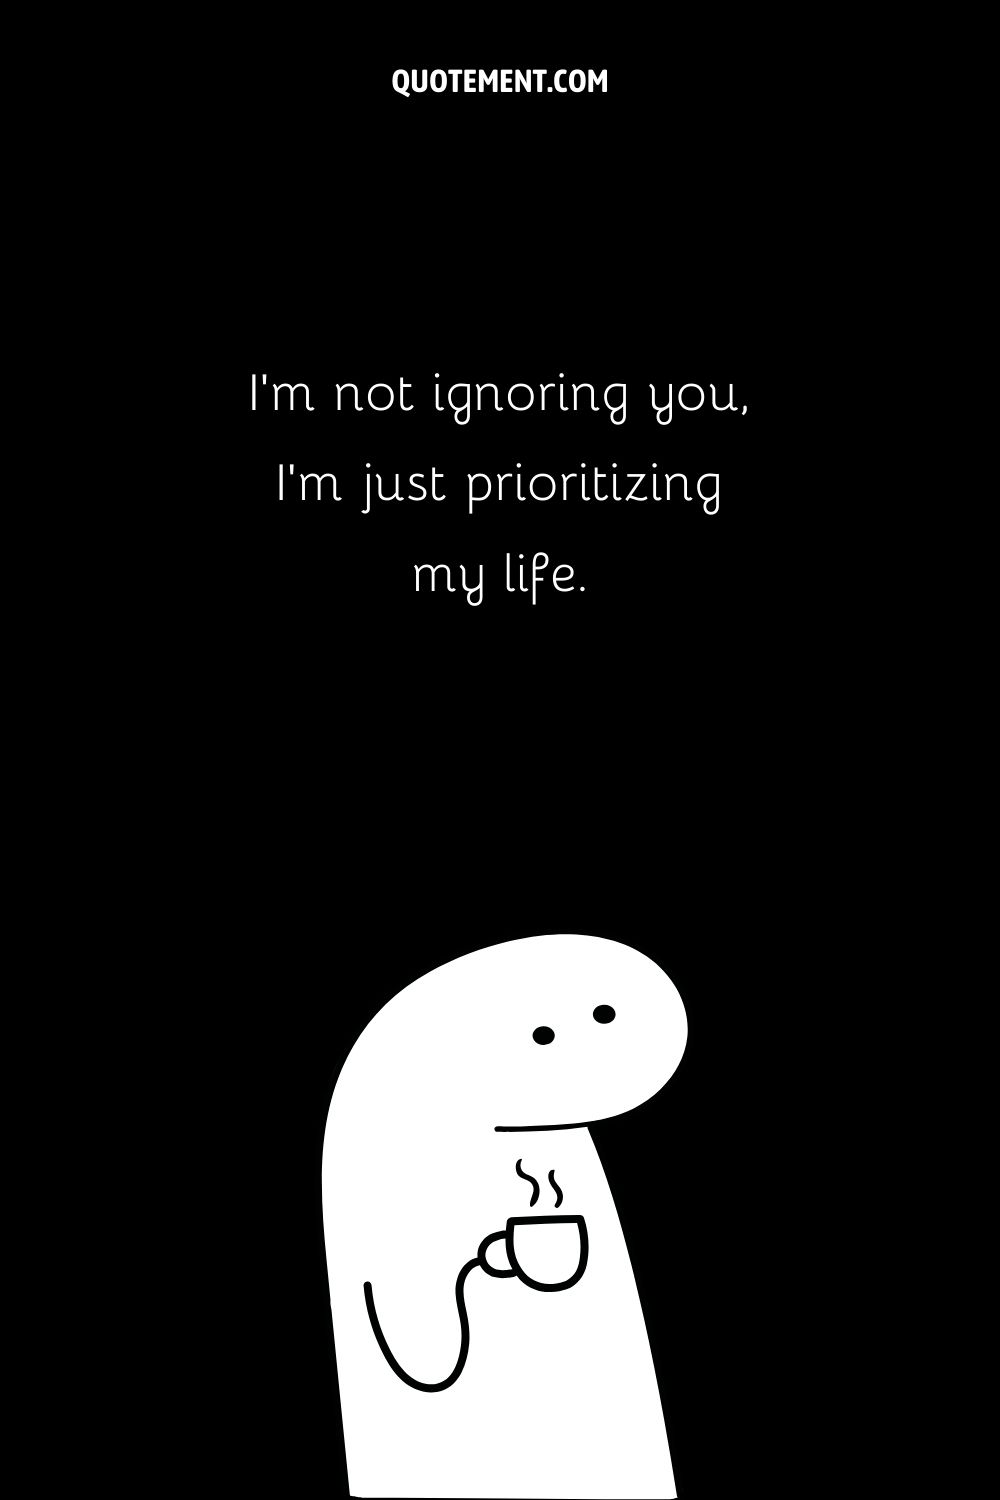 I’m not ignoring you, I’m just prioritizing my life.